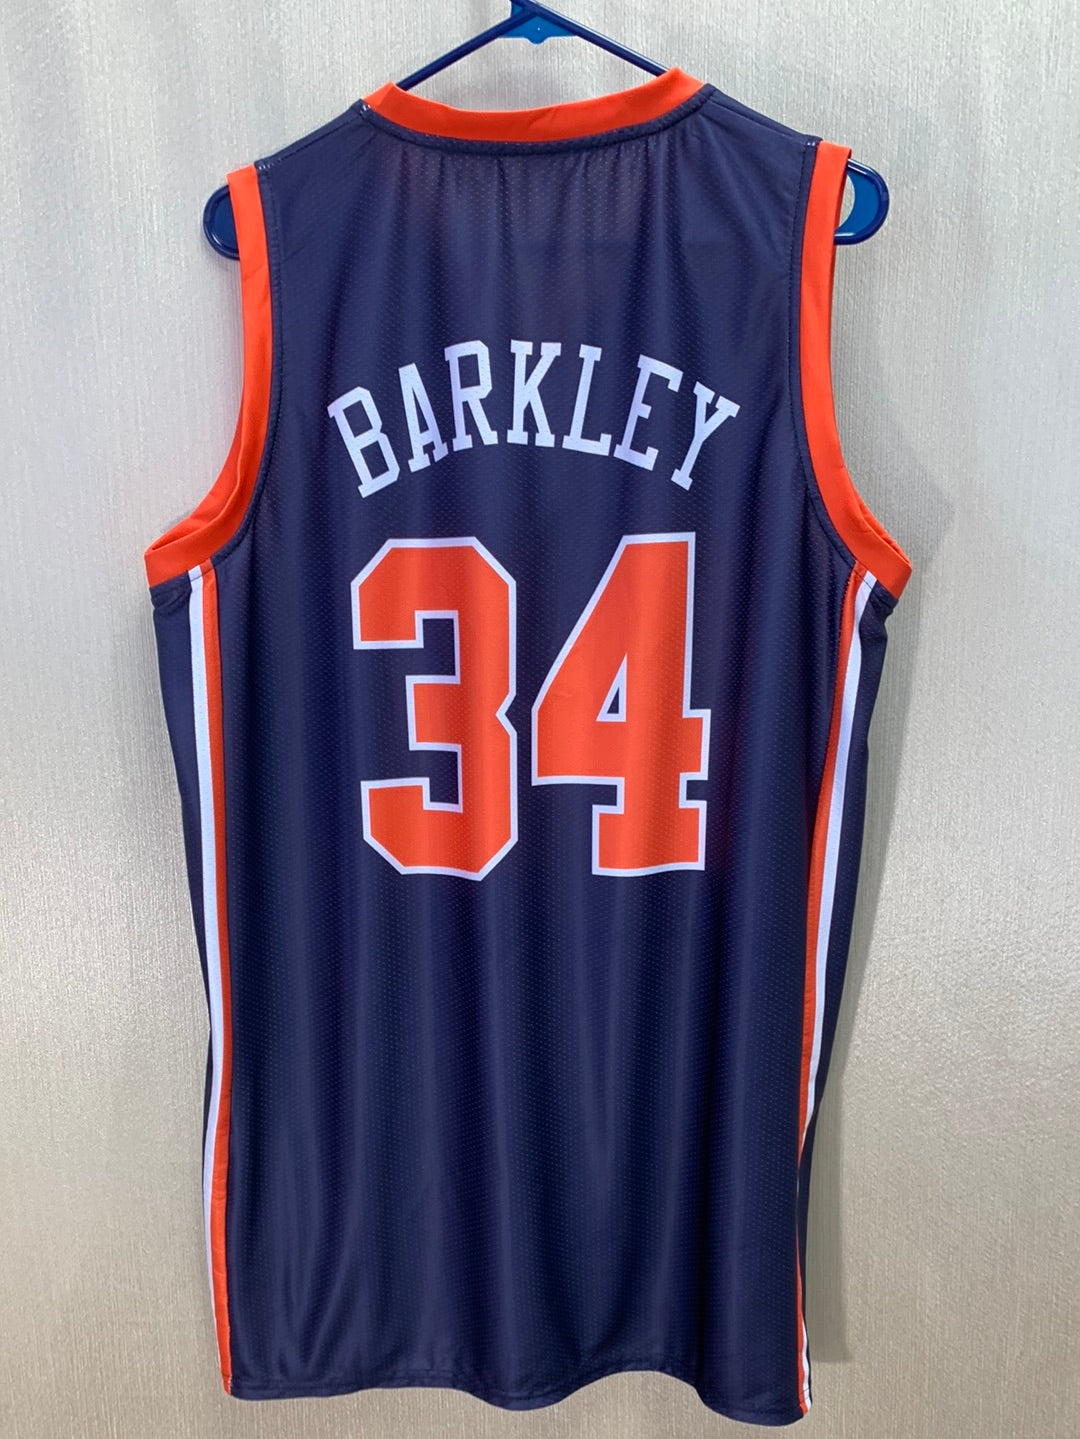 Vintage Retro Charles Barkley 34 Auburn Throwback Basketball Jersey - XL